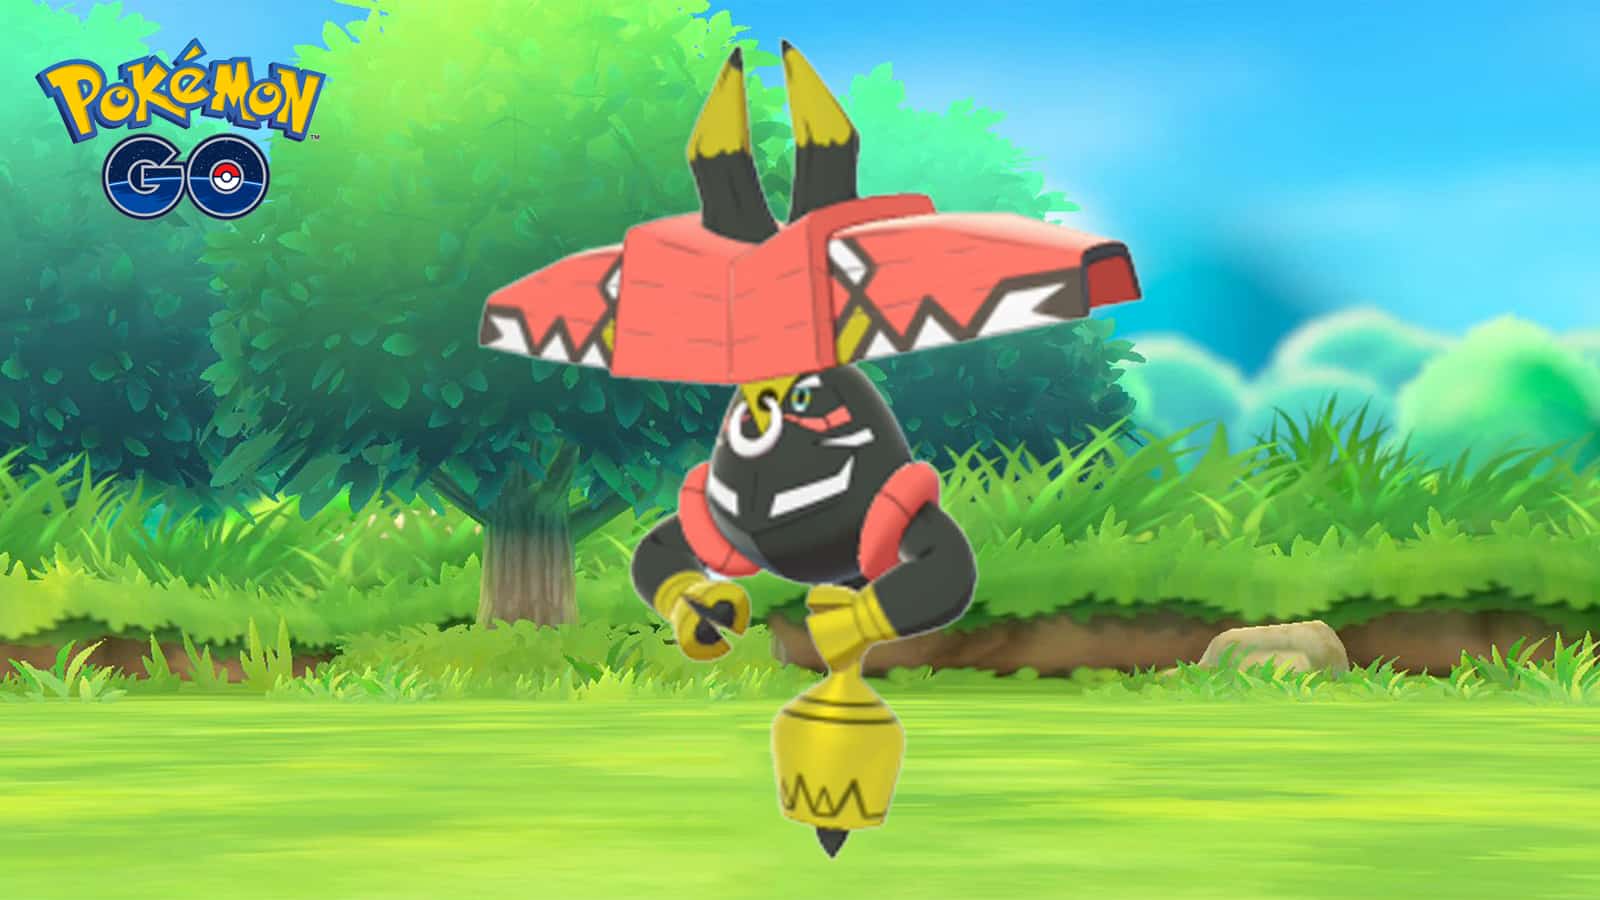 Tapu Bulu appearing in Pokemon Go Raids